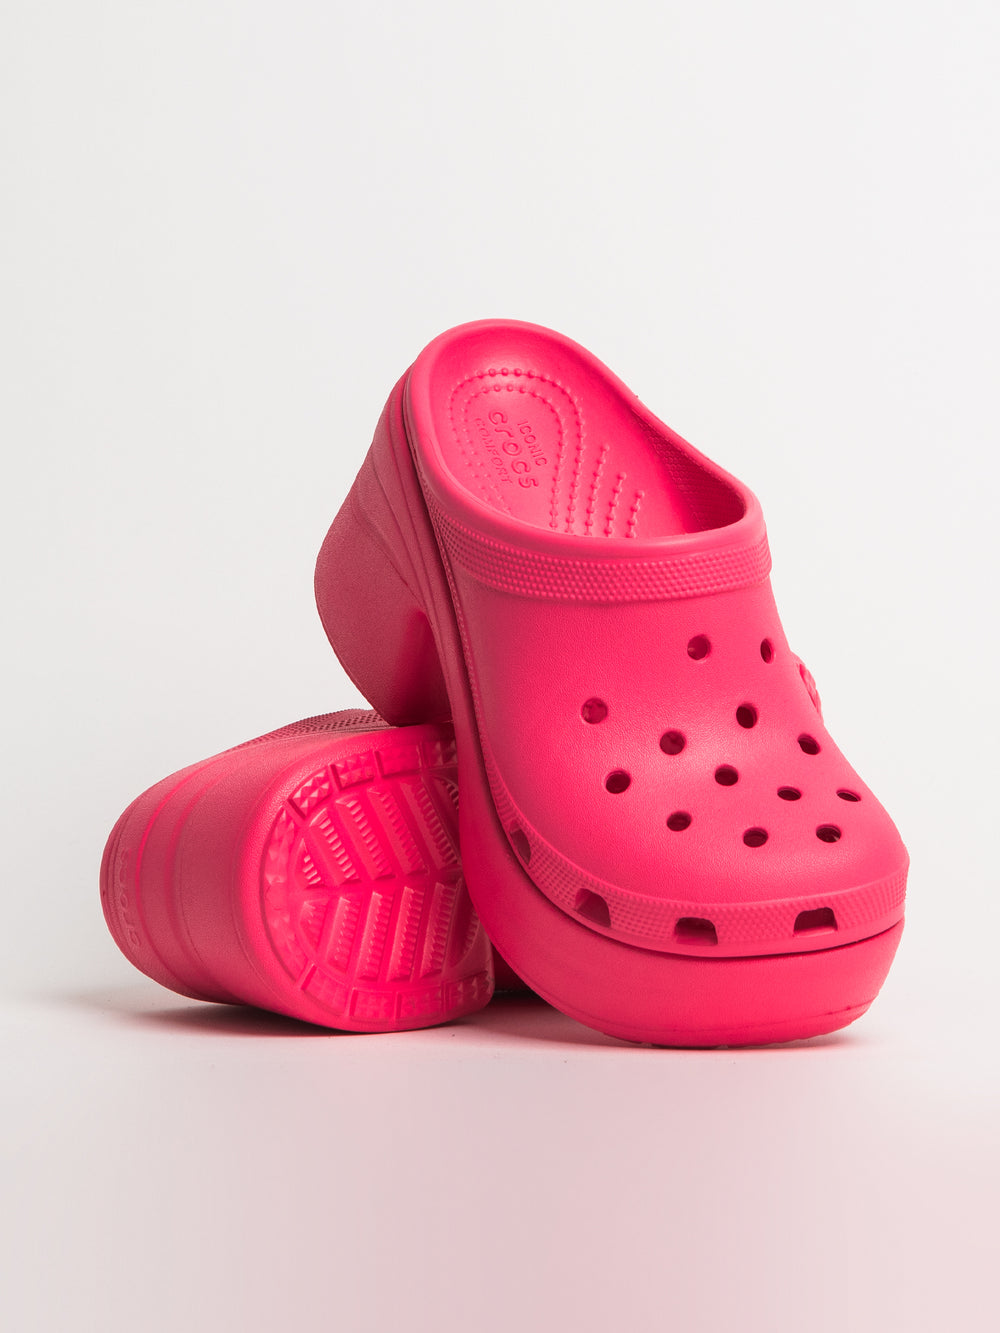 Crocs Platform Siren Sandals